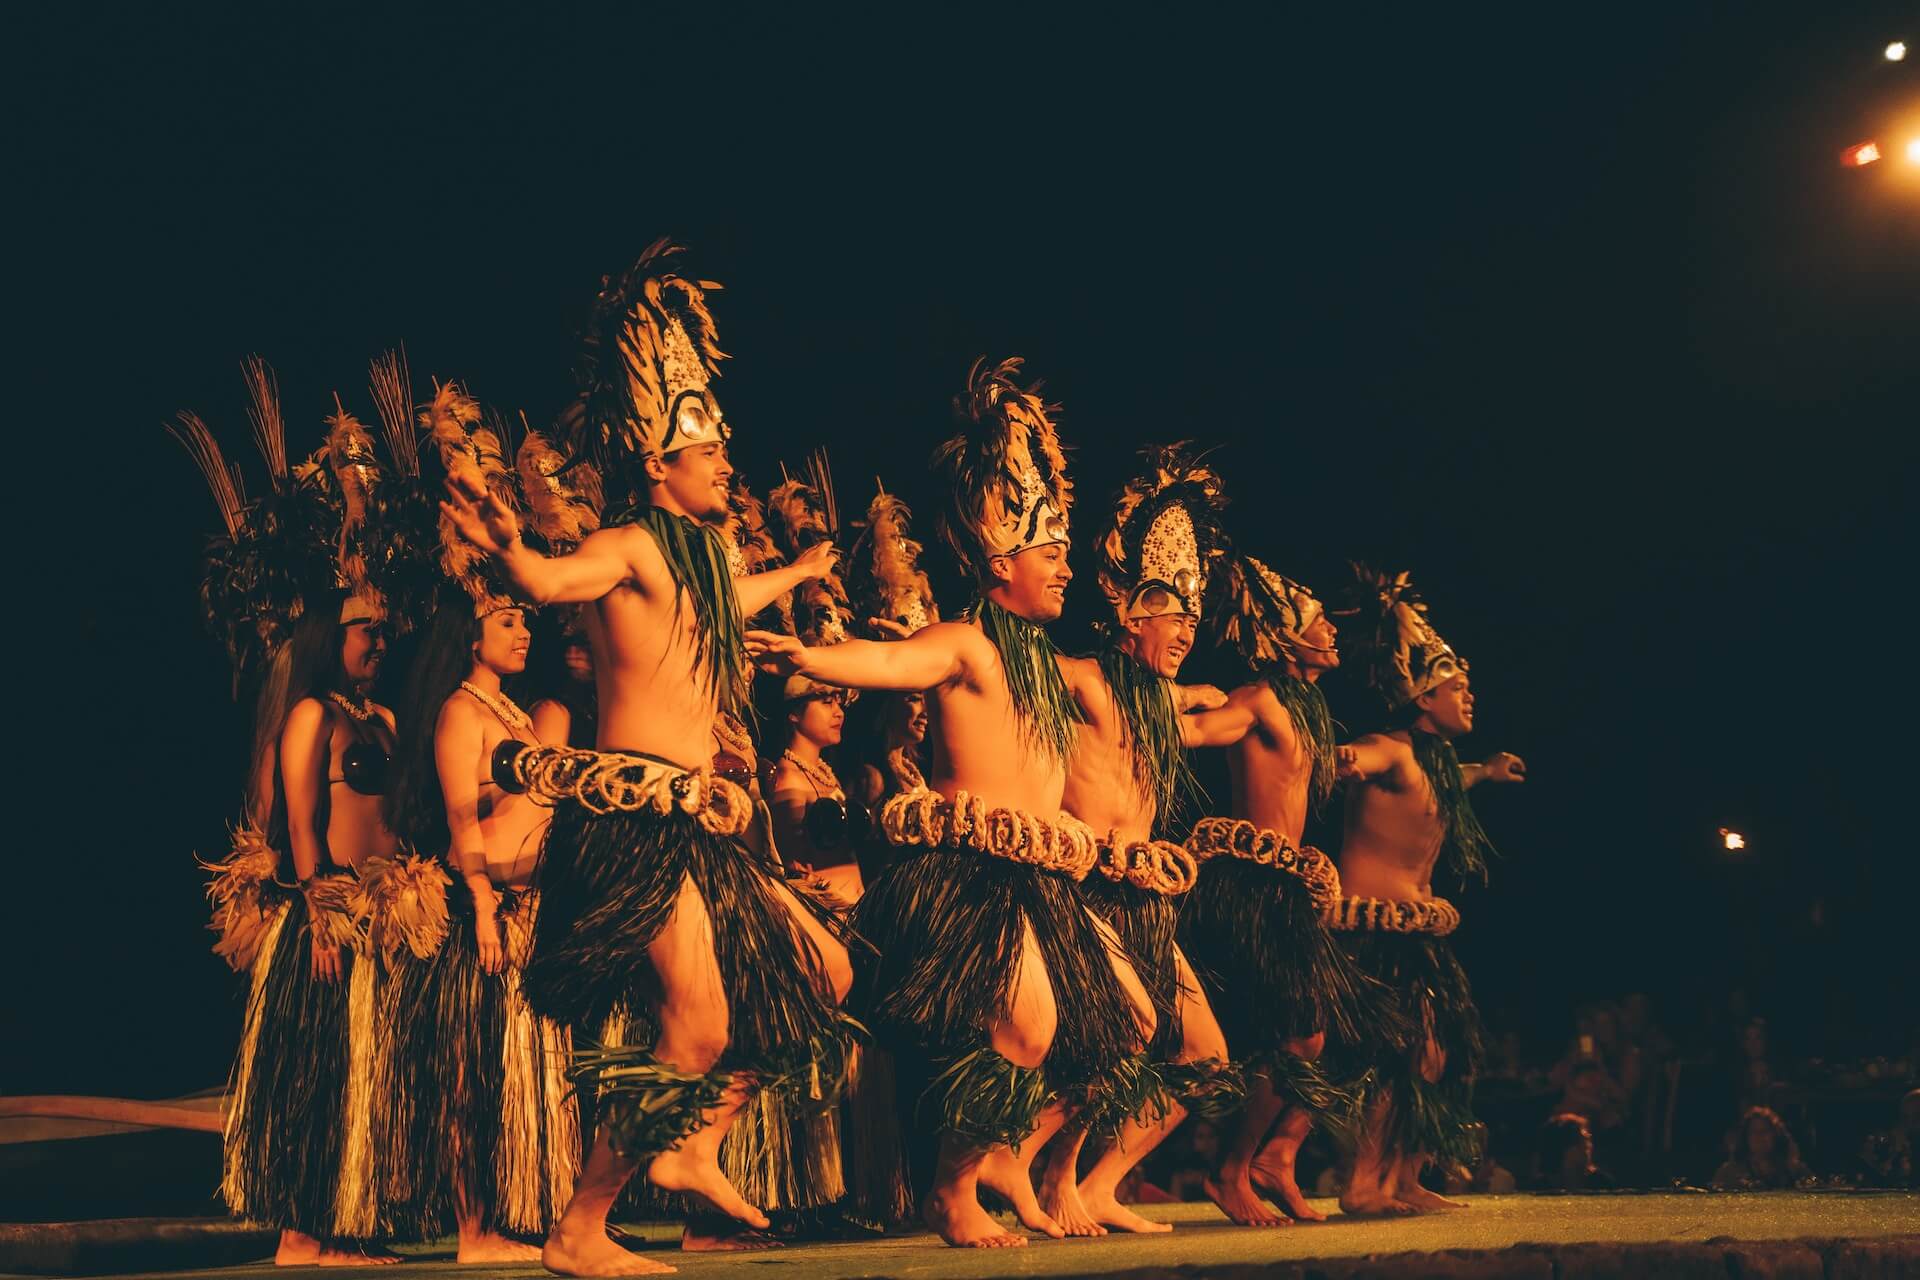 luau performers on stage